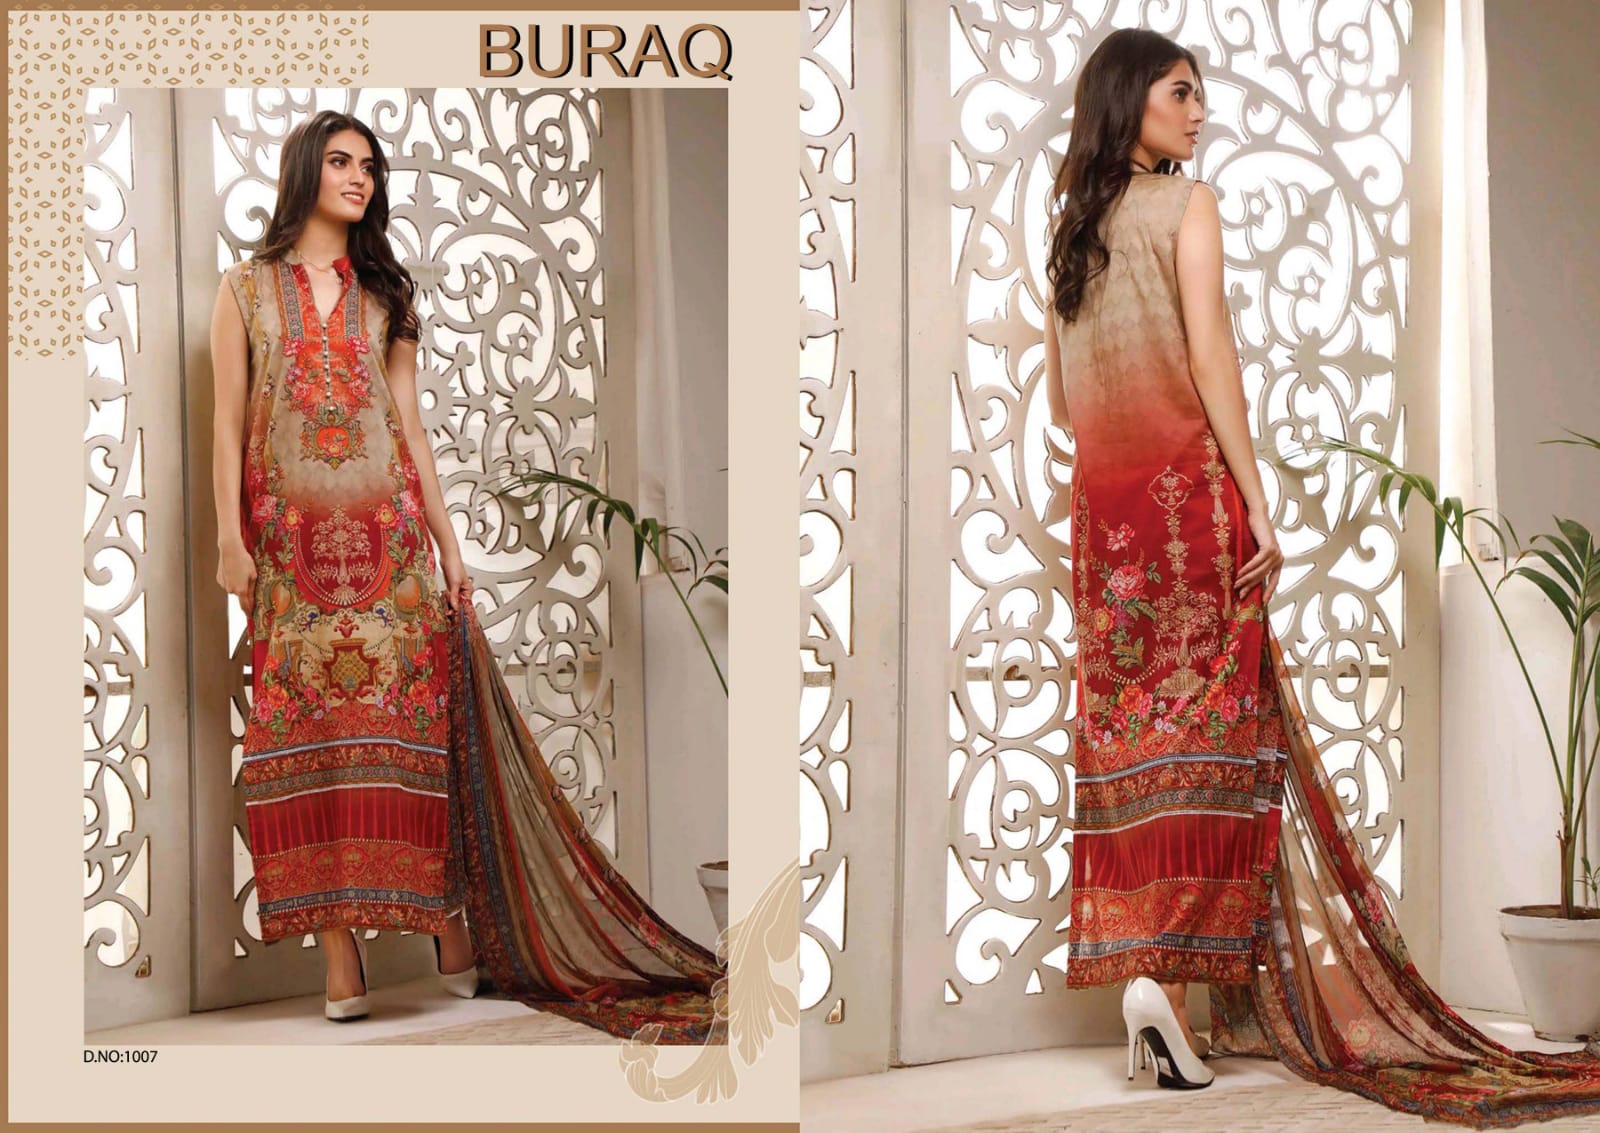 Agha Noor Buraq  Vol 2 Karachi Cotton Dress Material Catalog